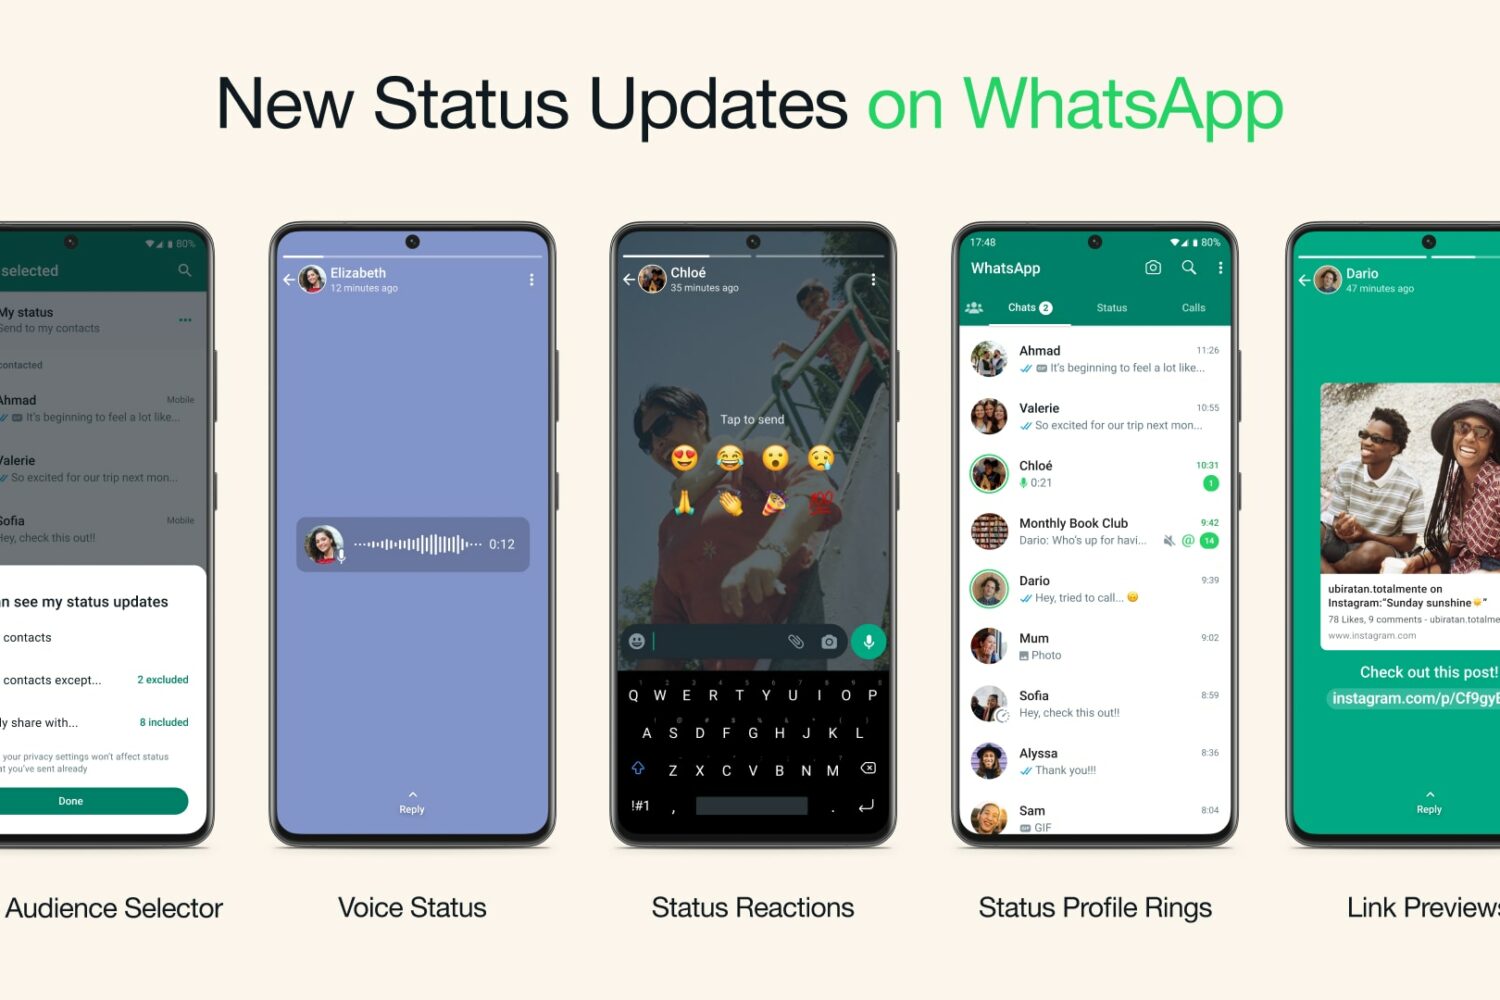 Marketing image showcasing five new WhatsApp Status features